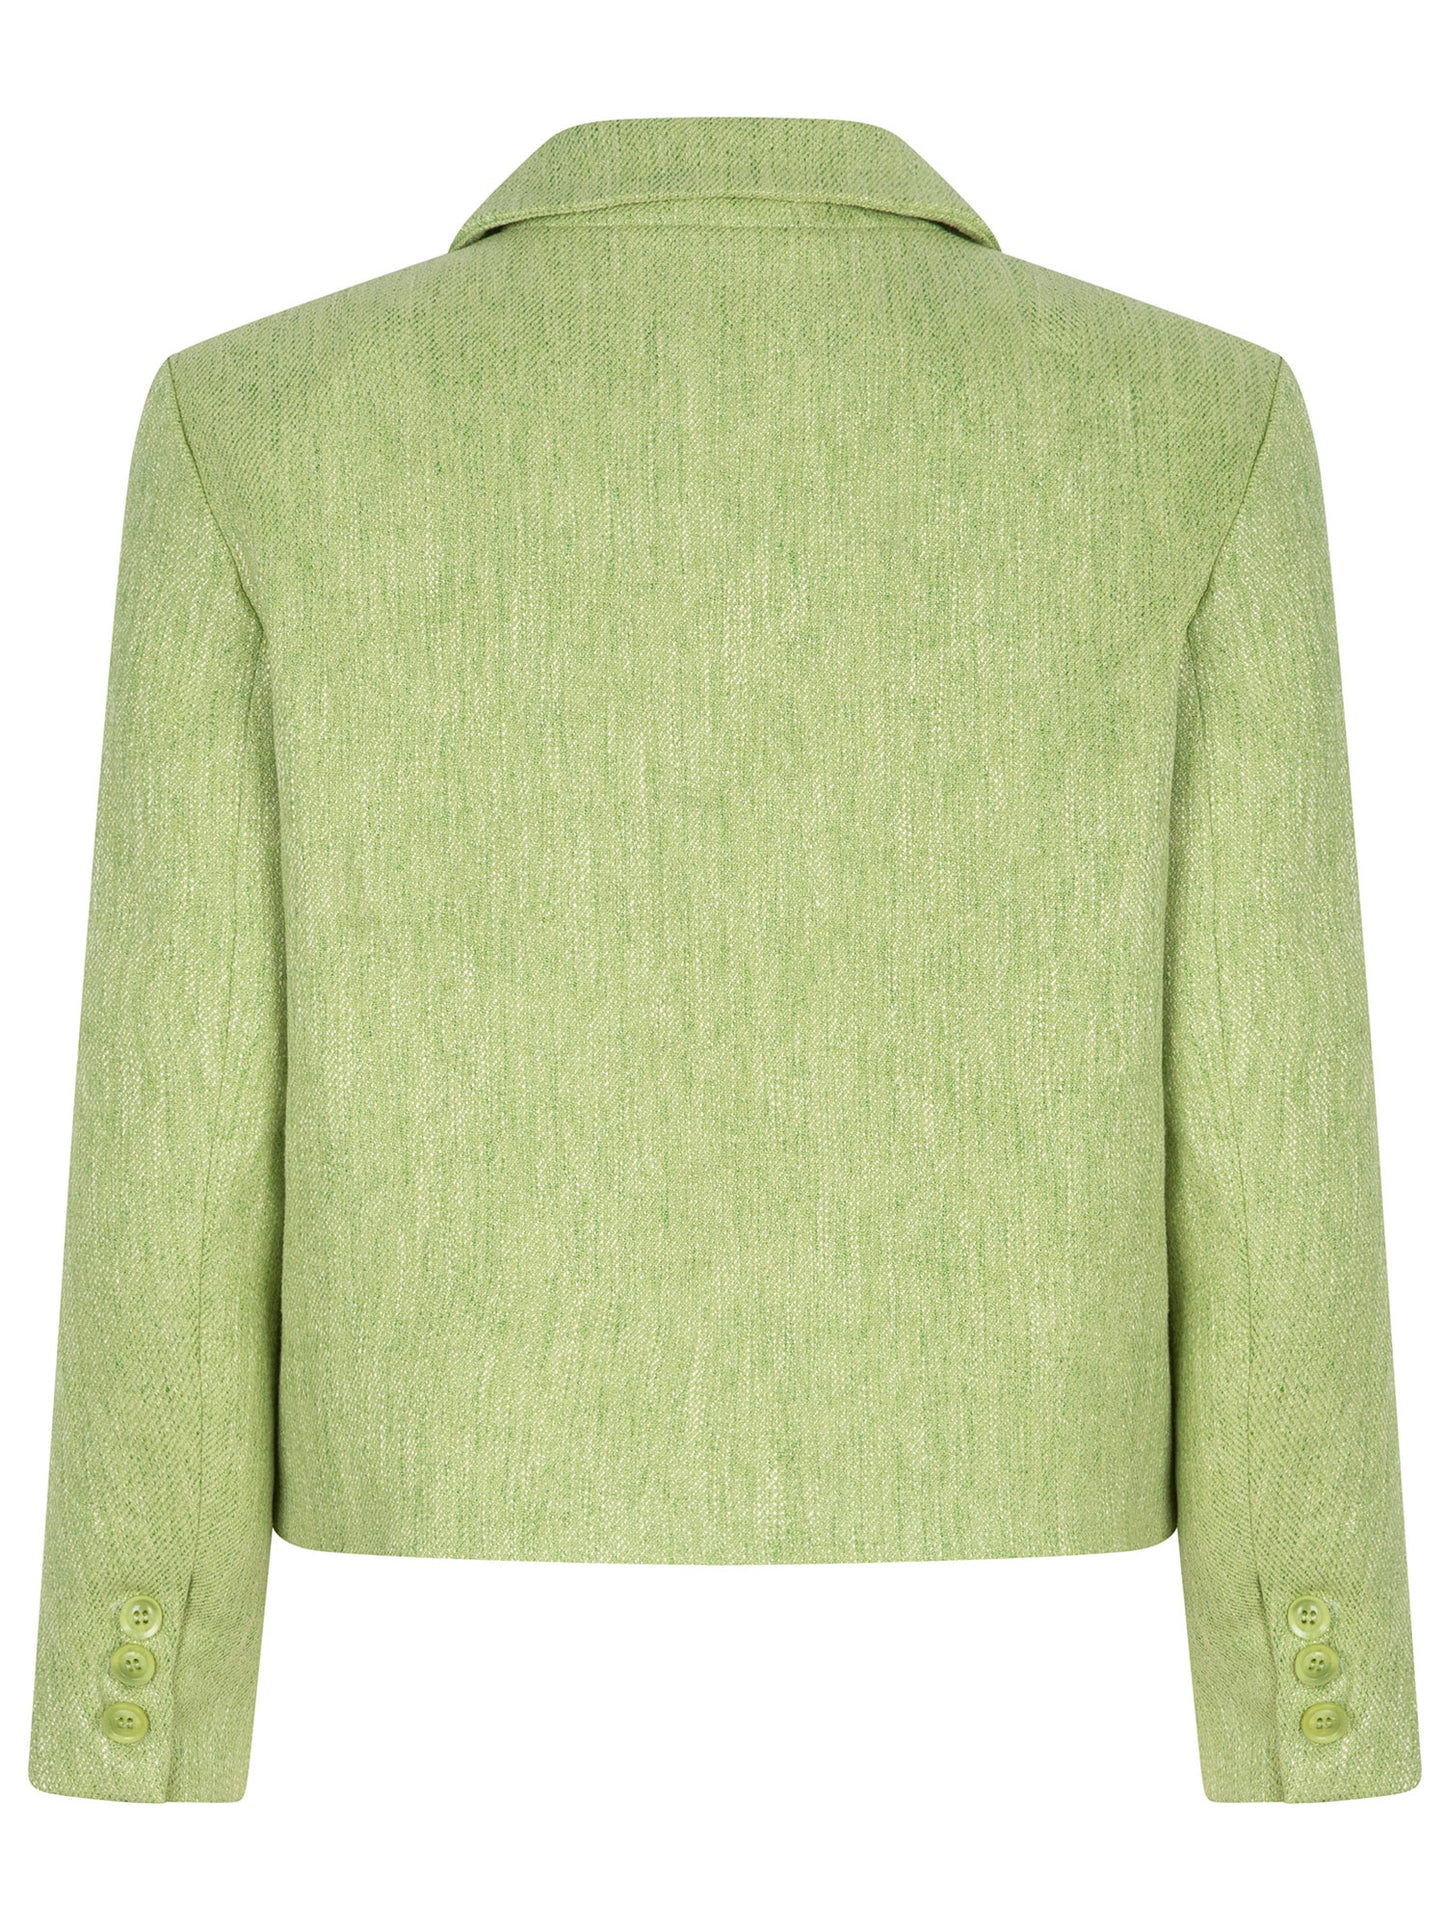 Jacket Margot soft green